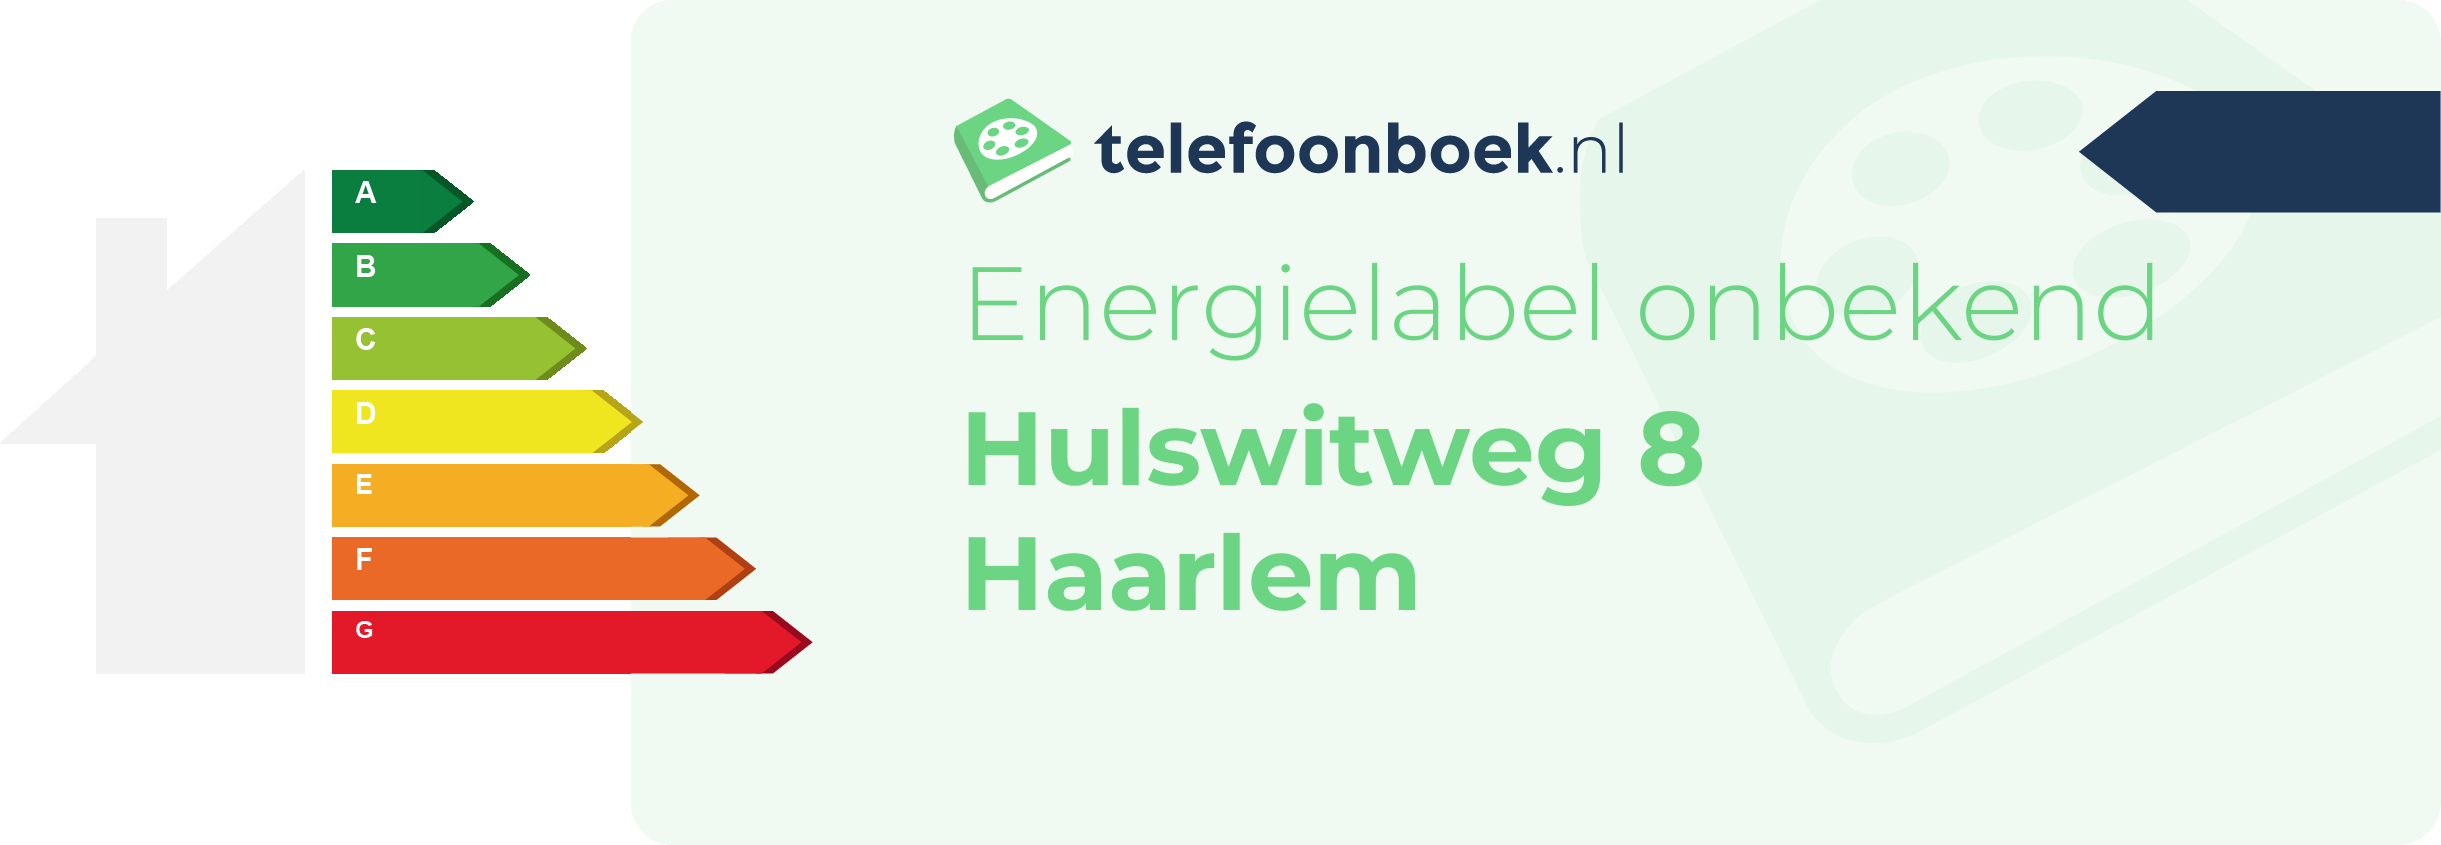 Energielabel Hulswitweg 8 Haarlem